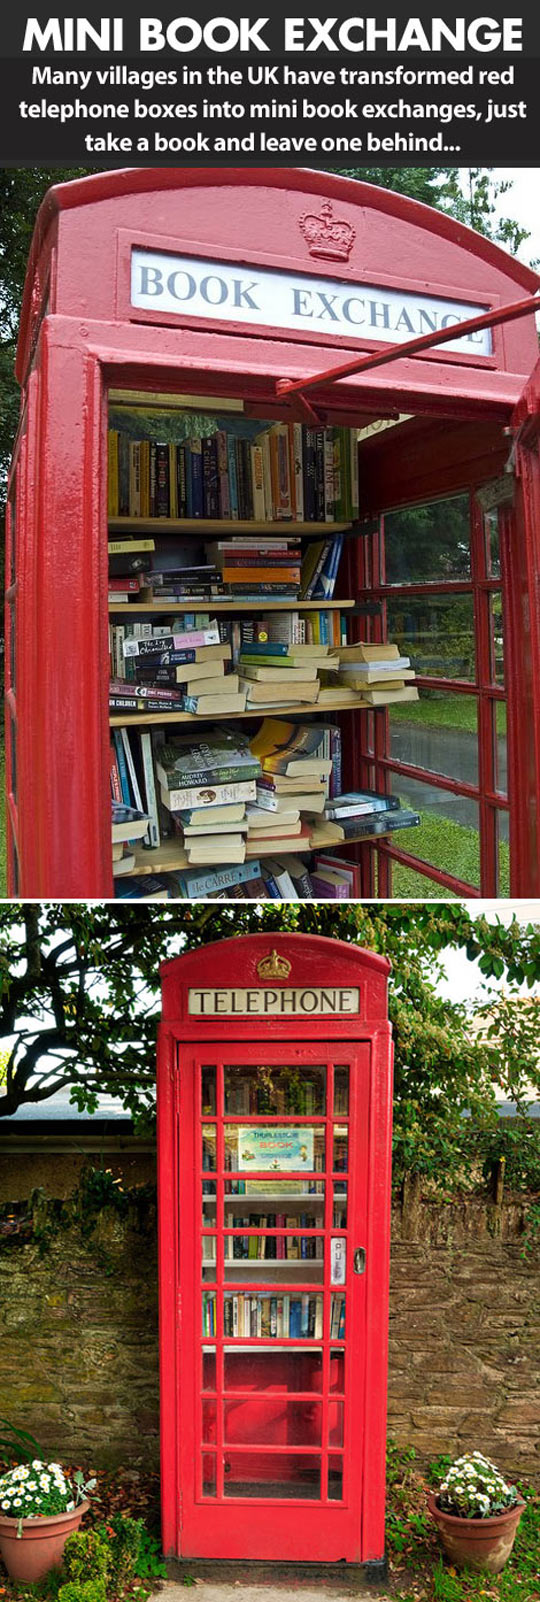 England-UK-phone-box-books-exchange